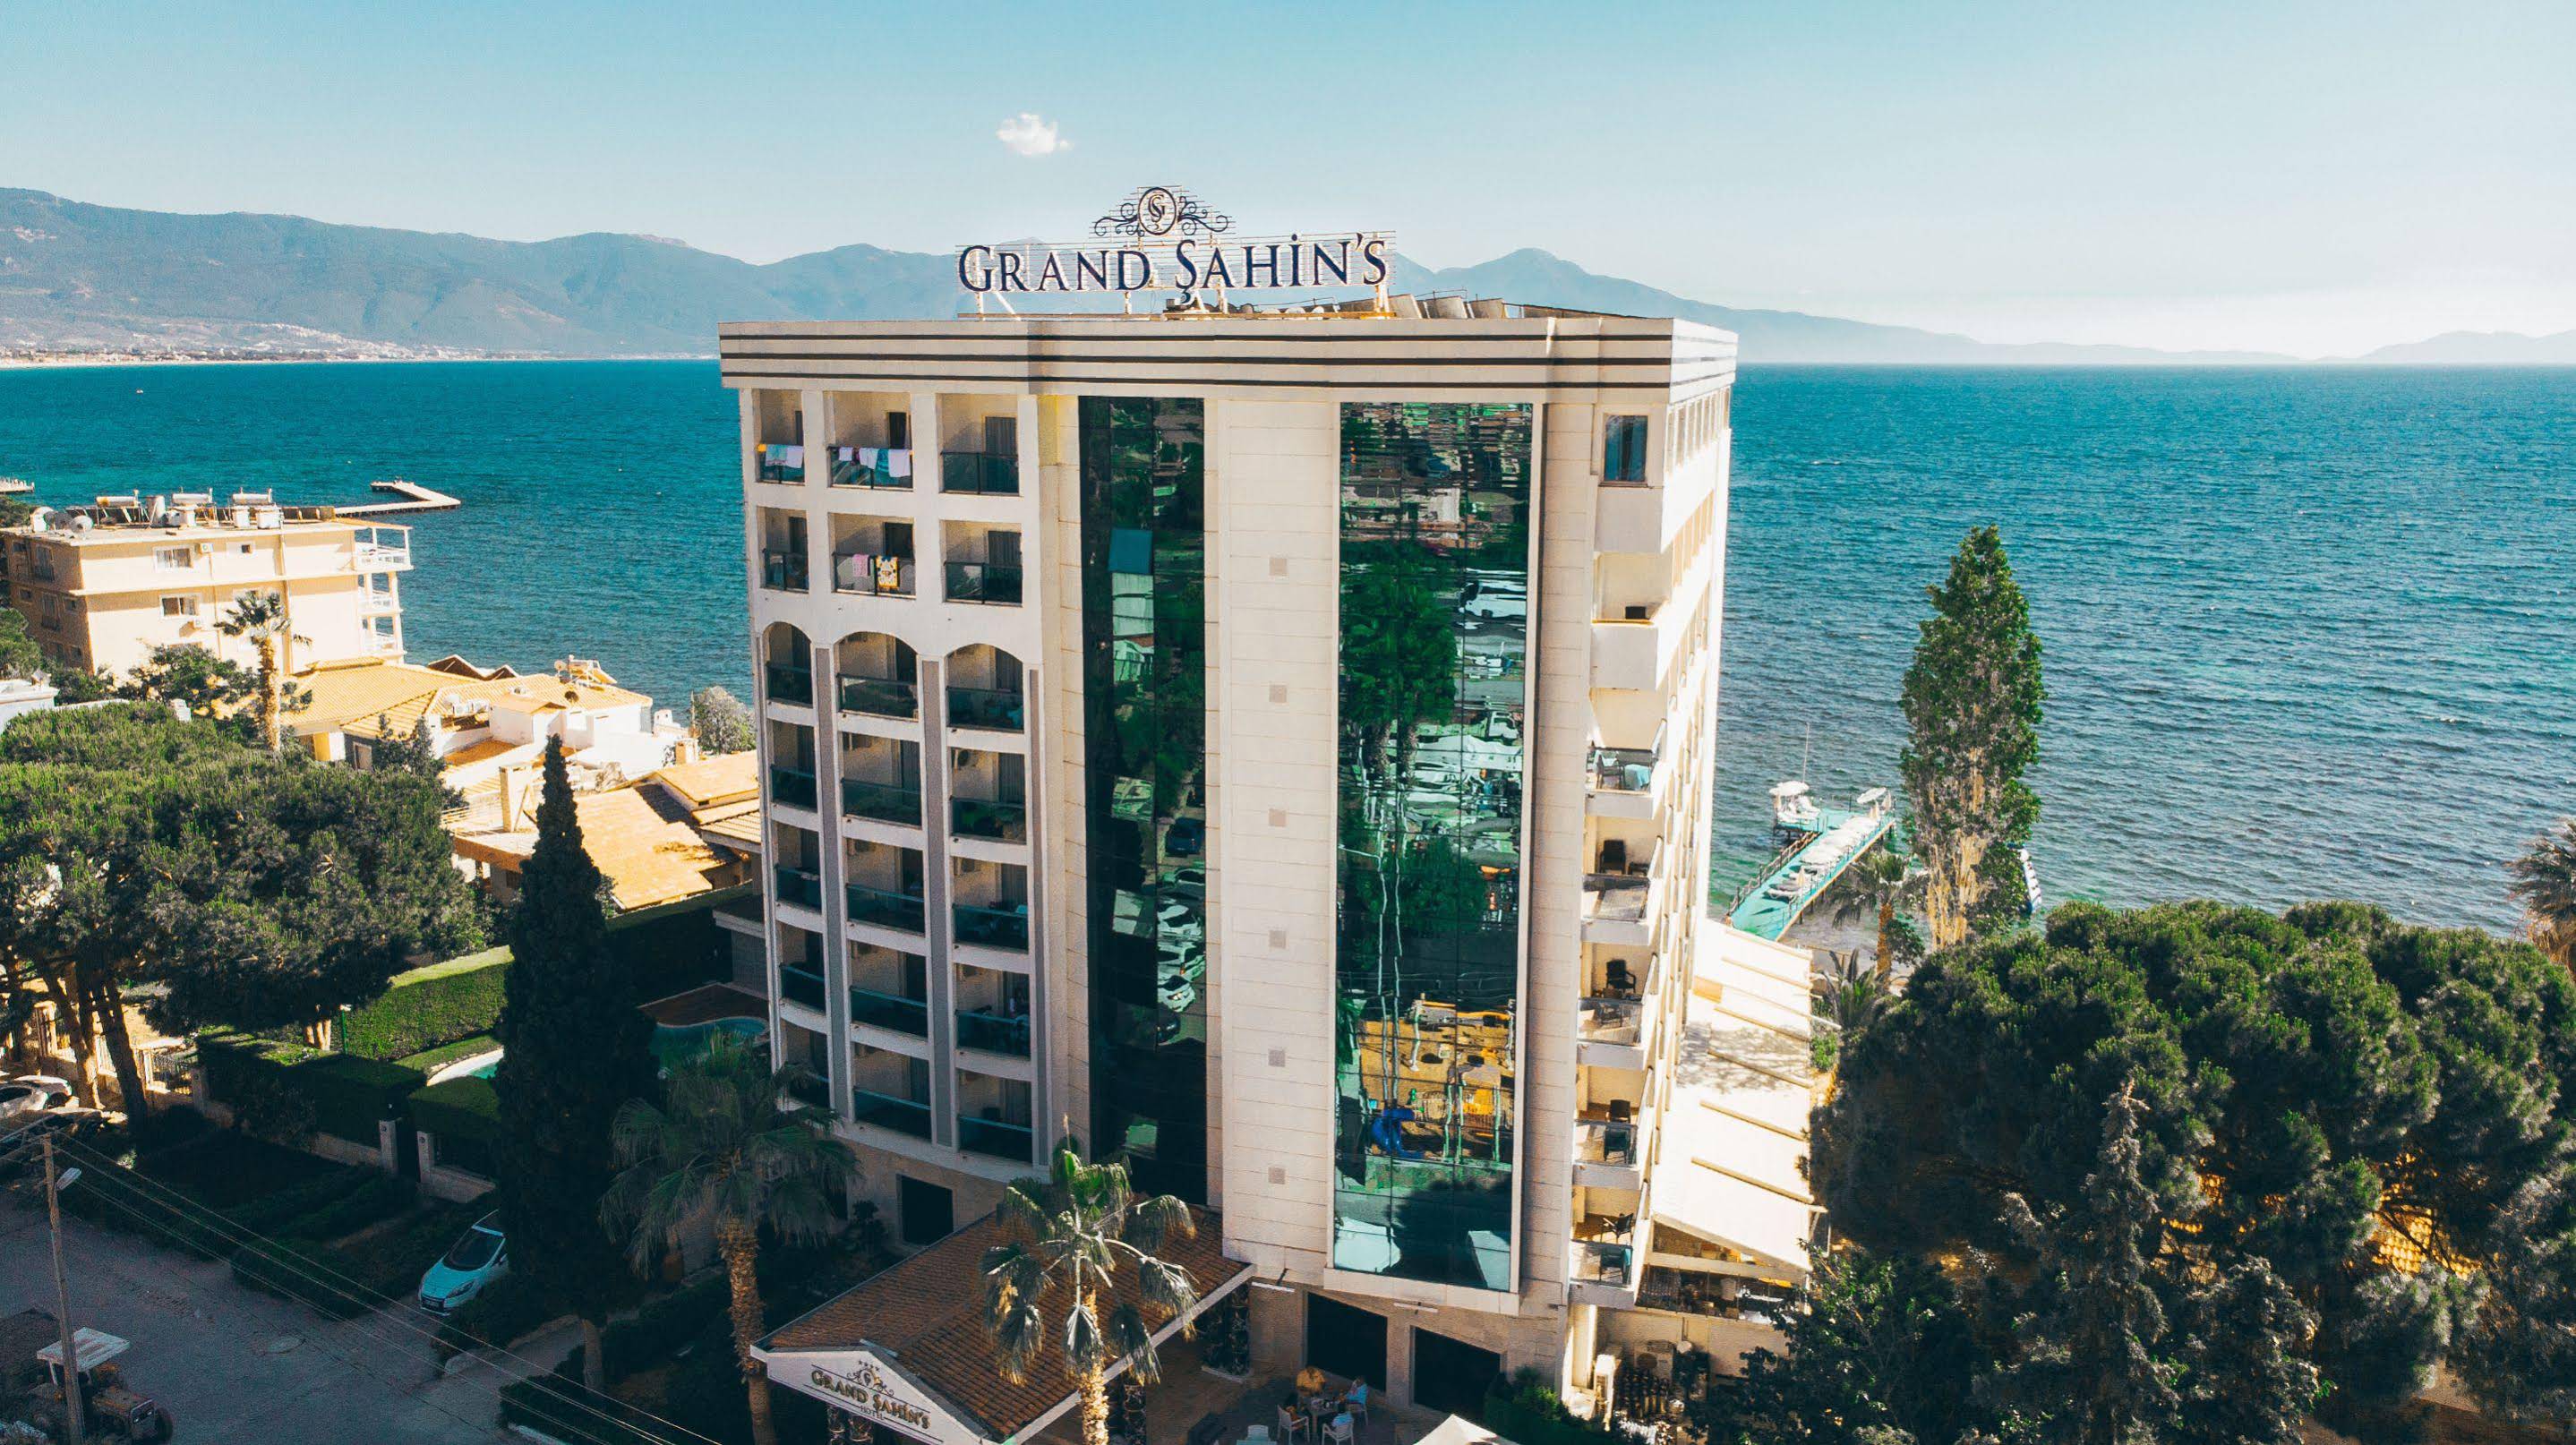 Grand Sahin's Hotel